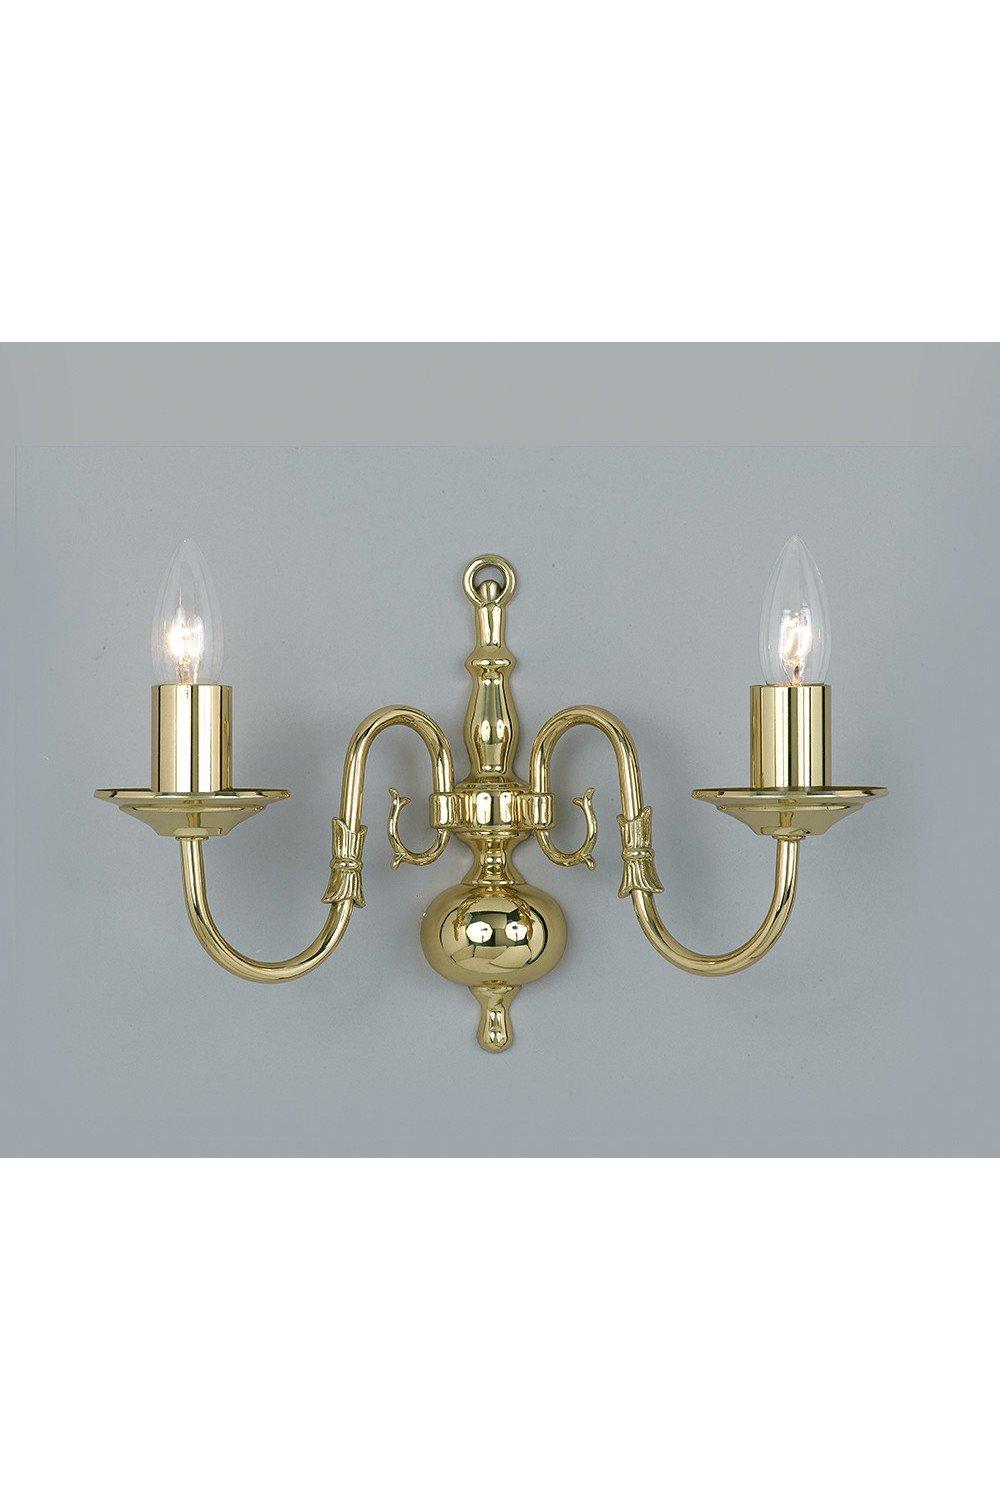 Flemish Polished Brass Candle Wall Lamp